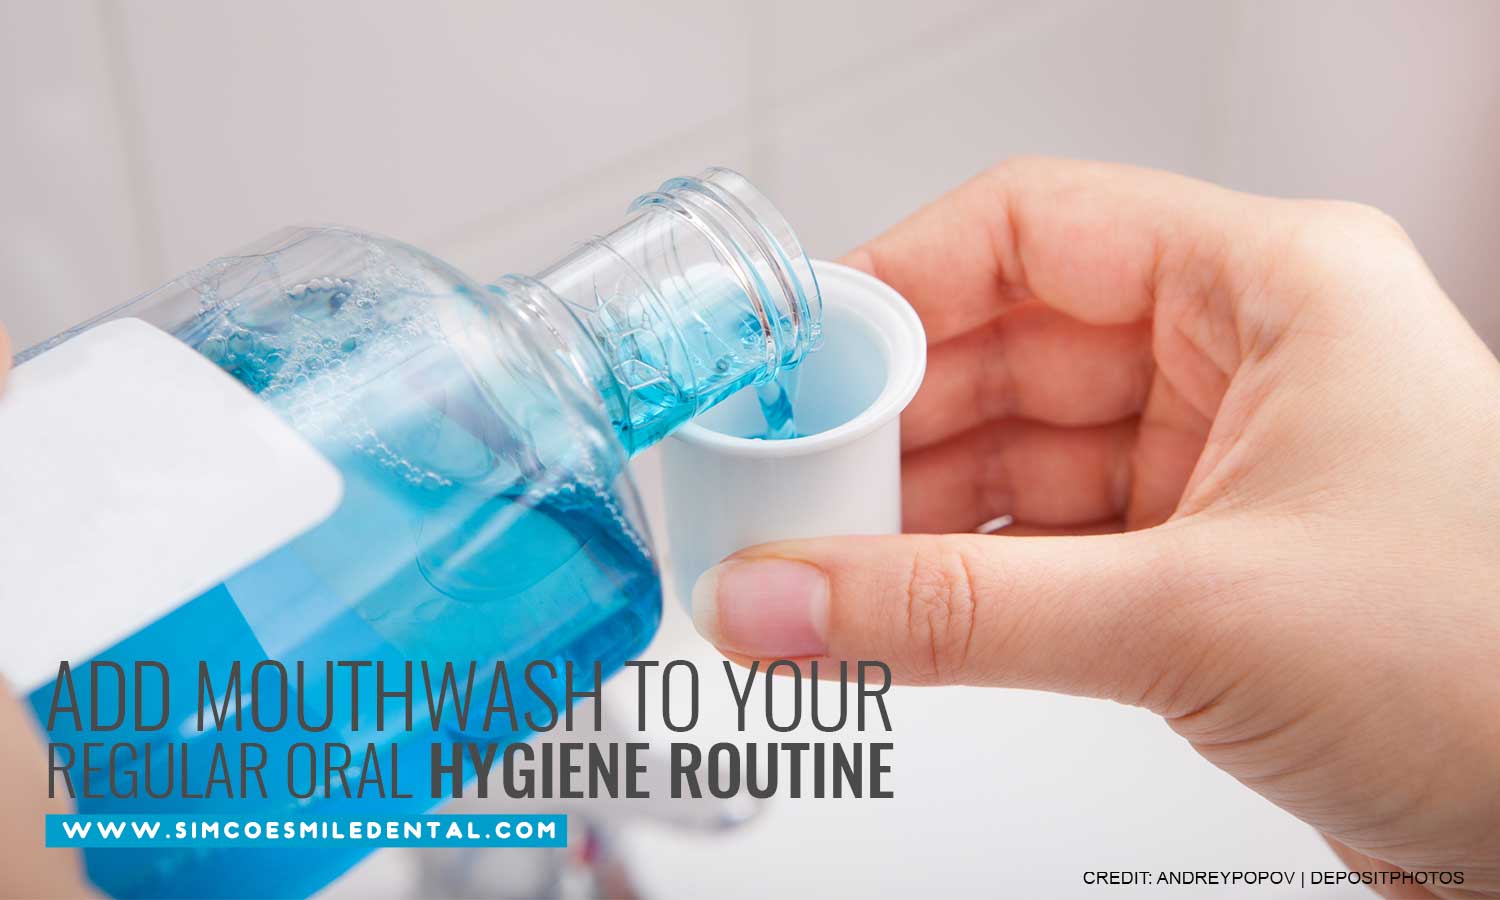 Add mouthwash to your regular oral hygiene routine